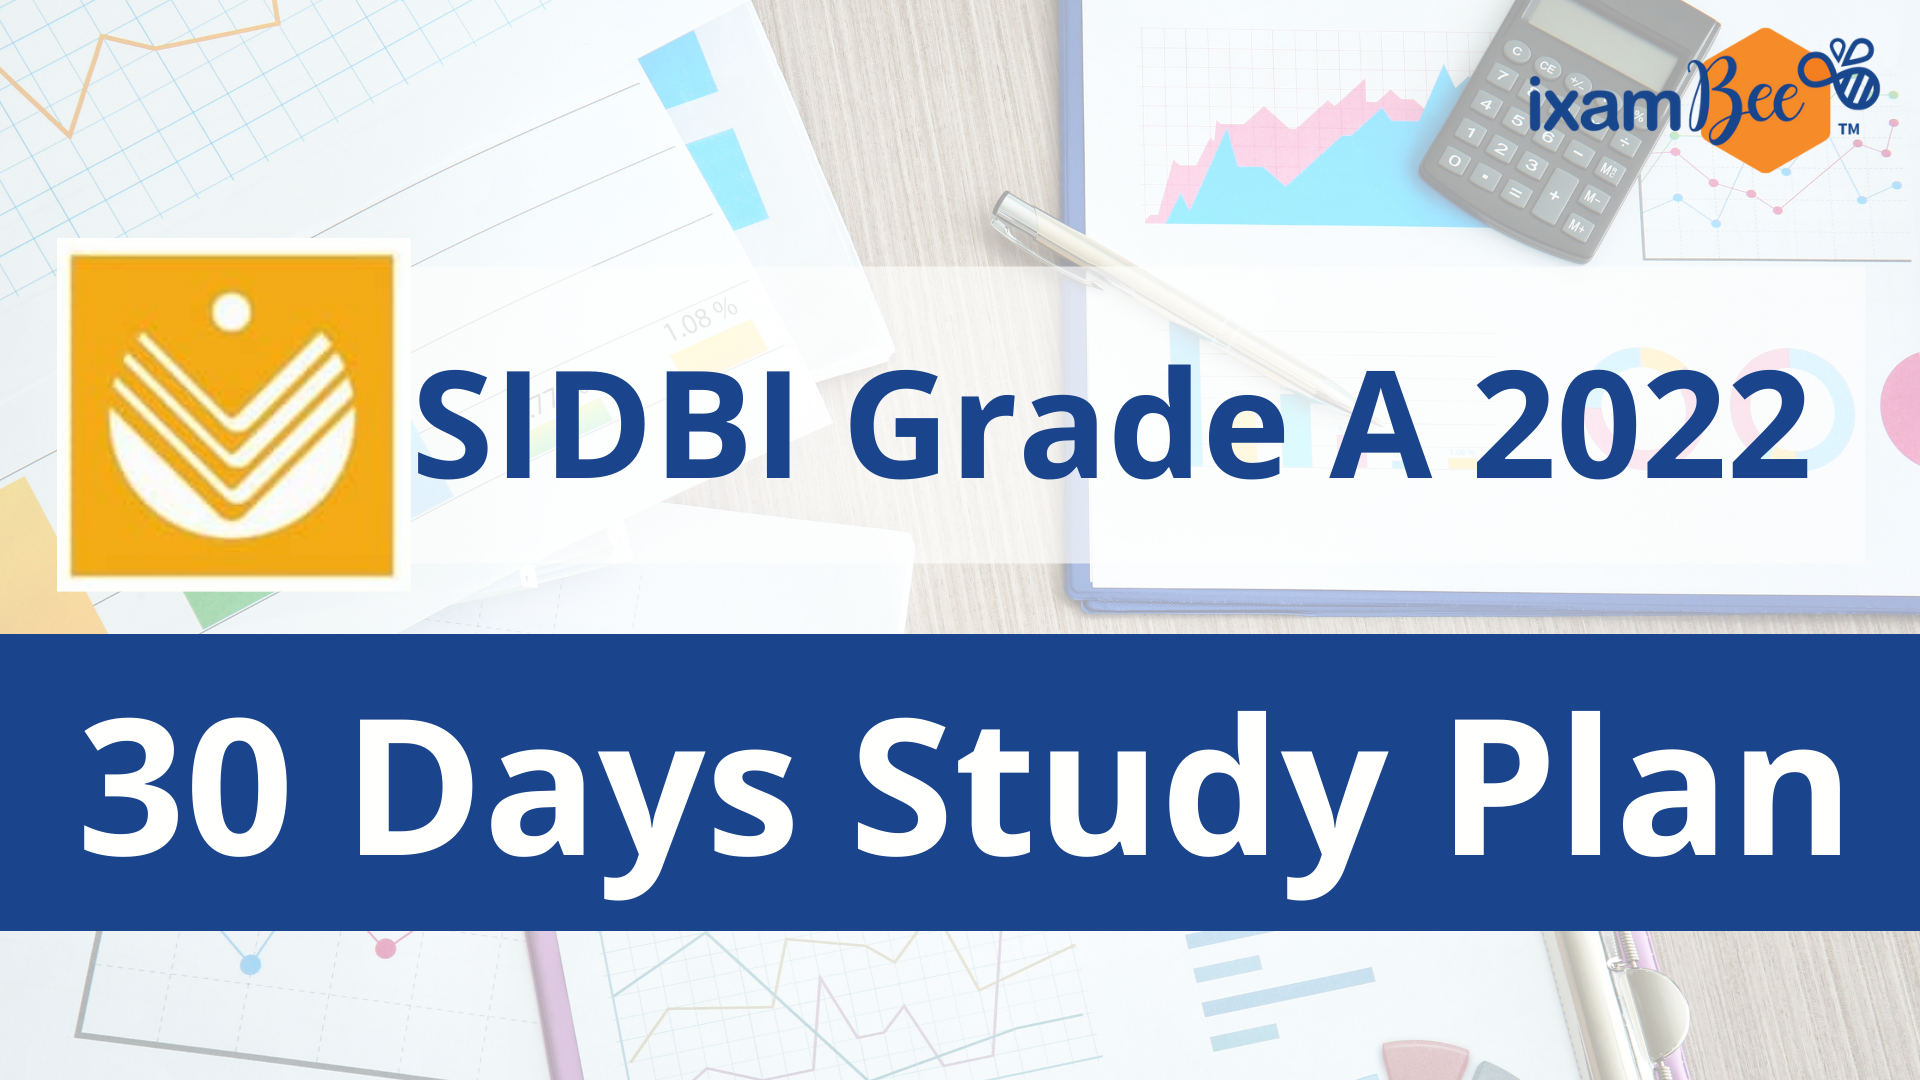 SIDBI Grade A 2022: 30 Days Study Plan